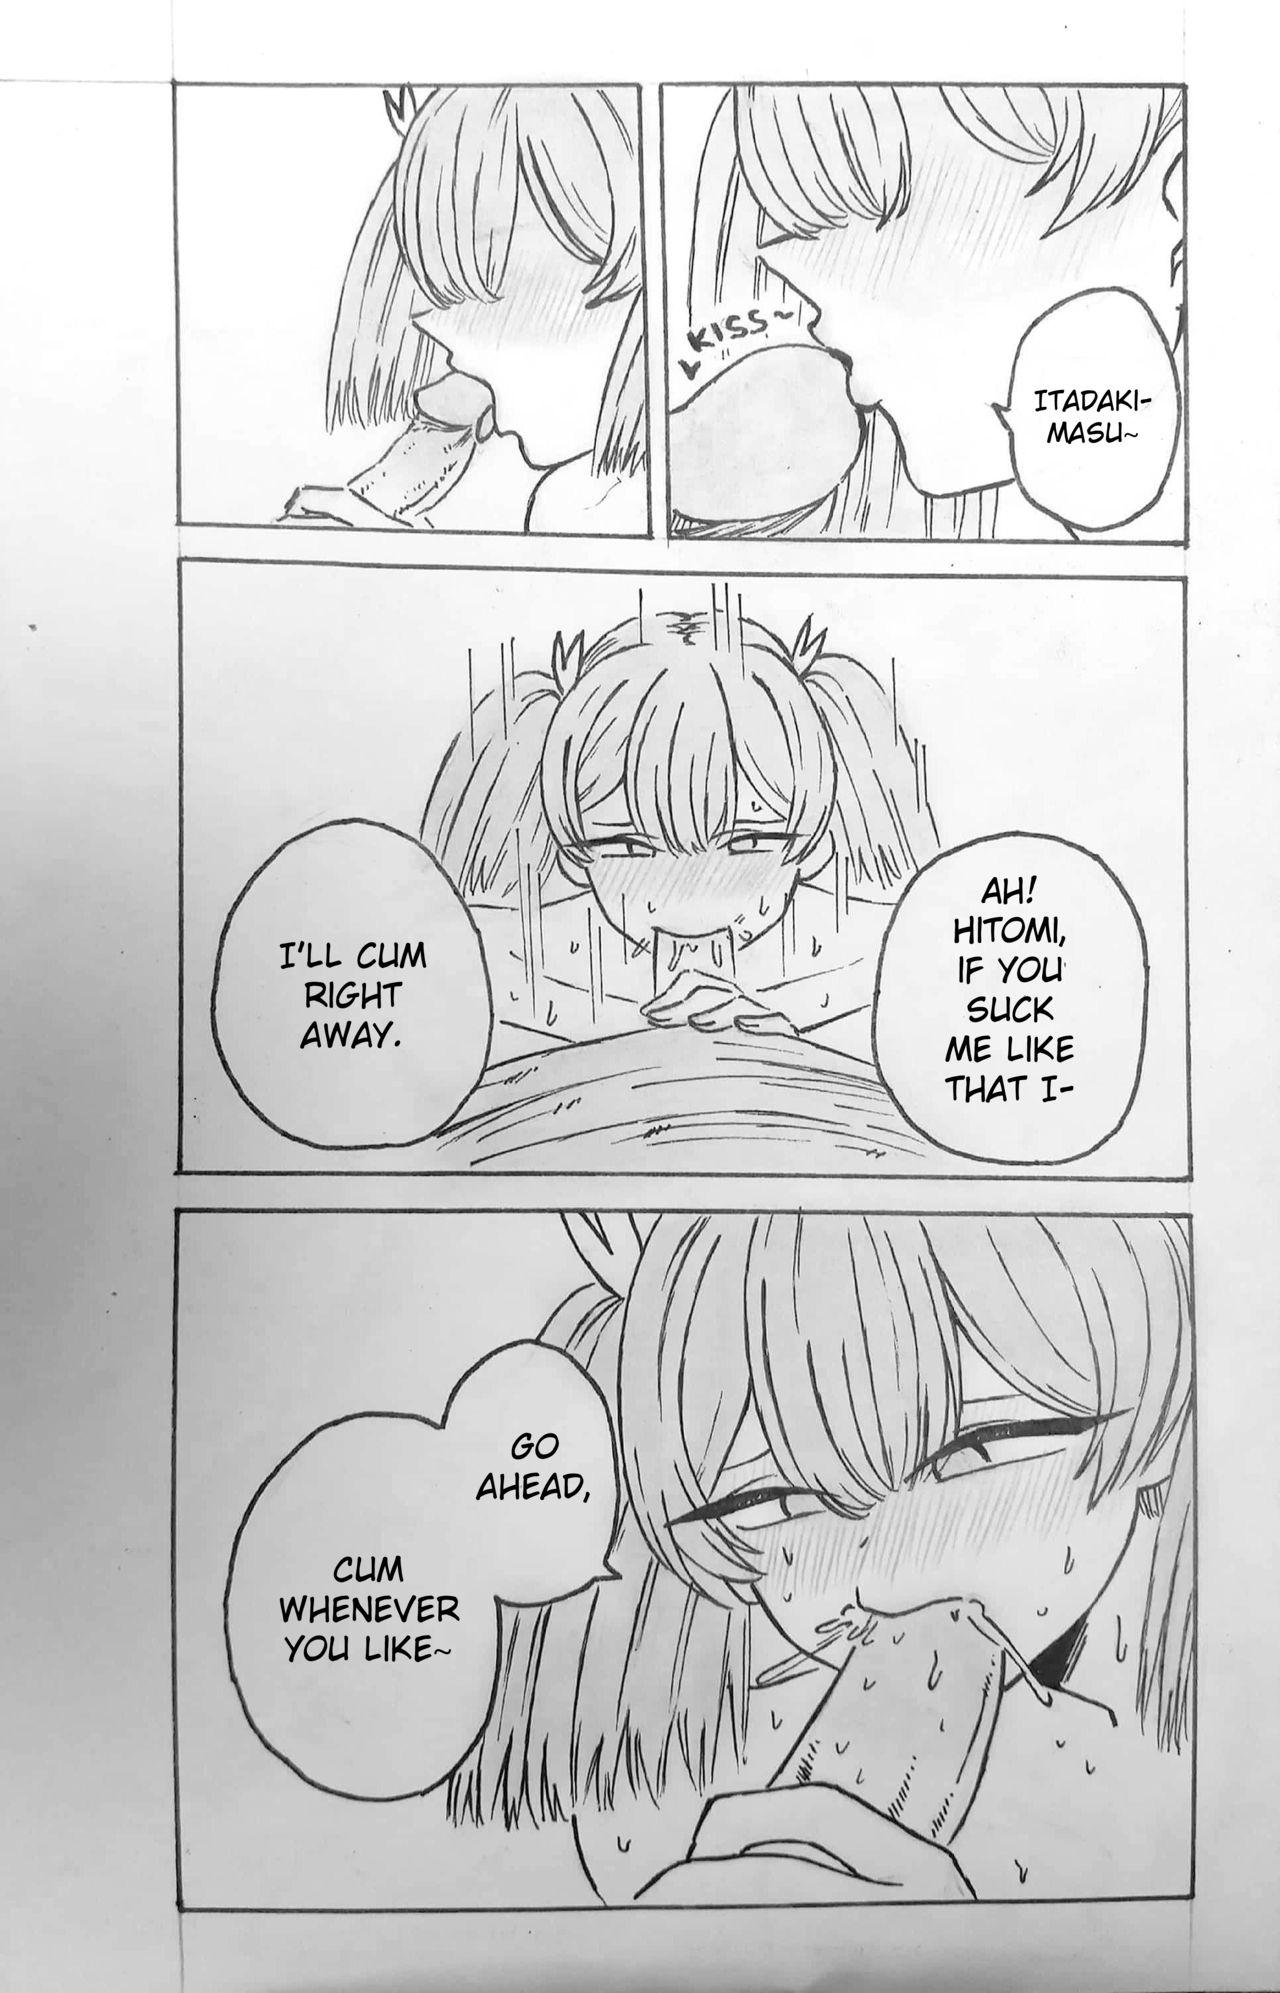 Chacal The Tadano Siblings Can't Control Their Urges - Komi-san wa komyushou desu. Arabic - Page 5